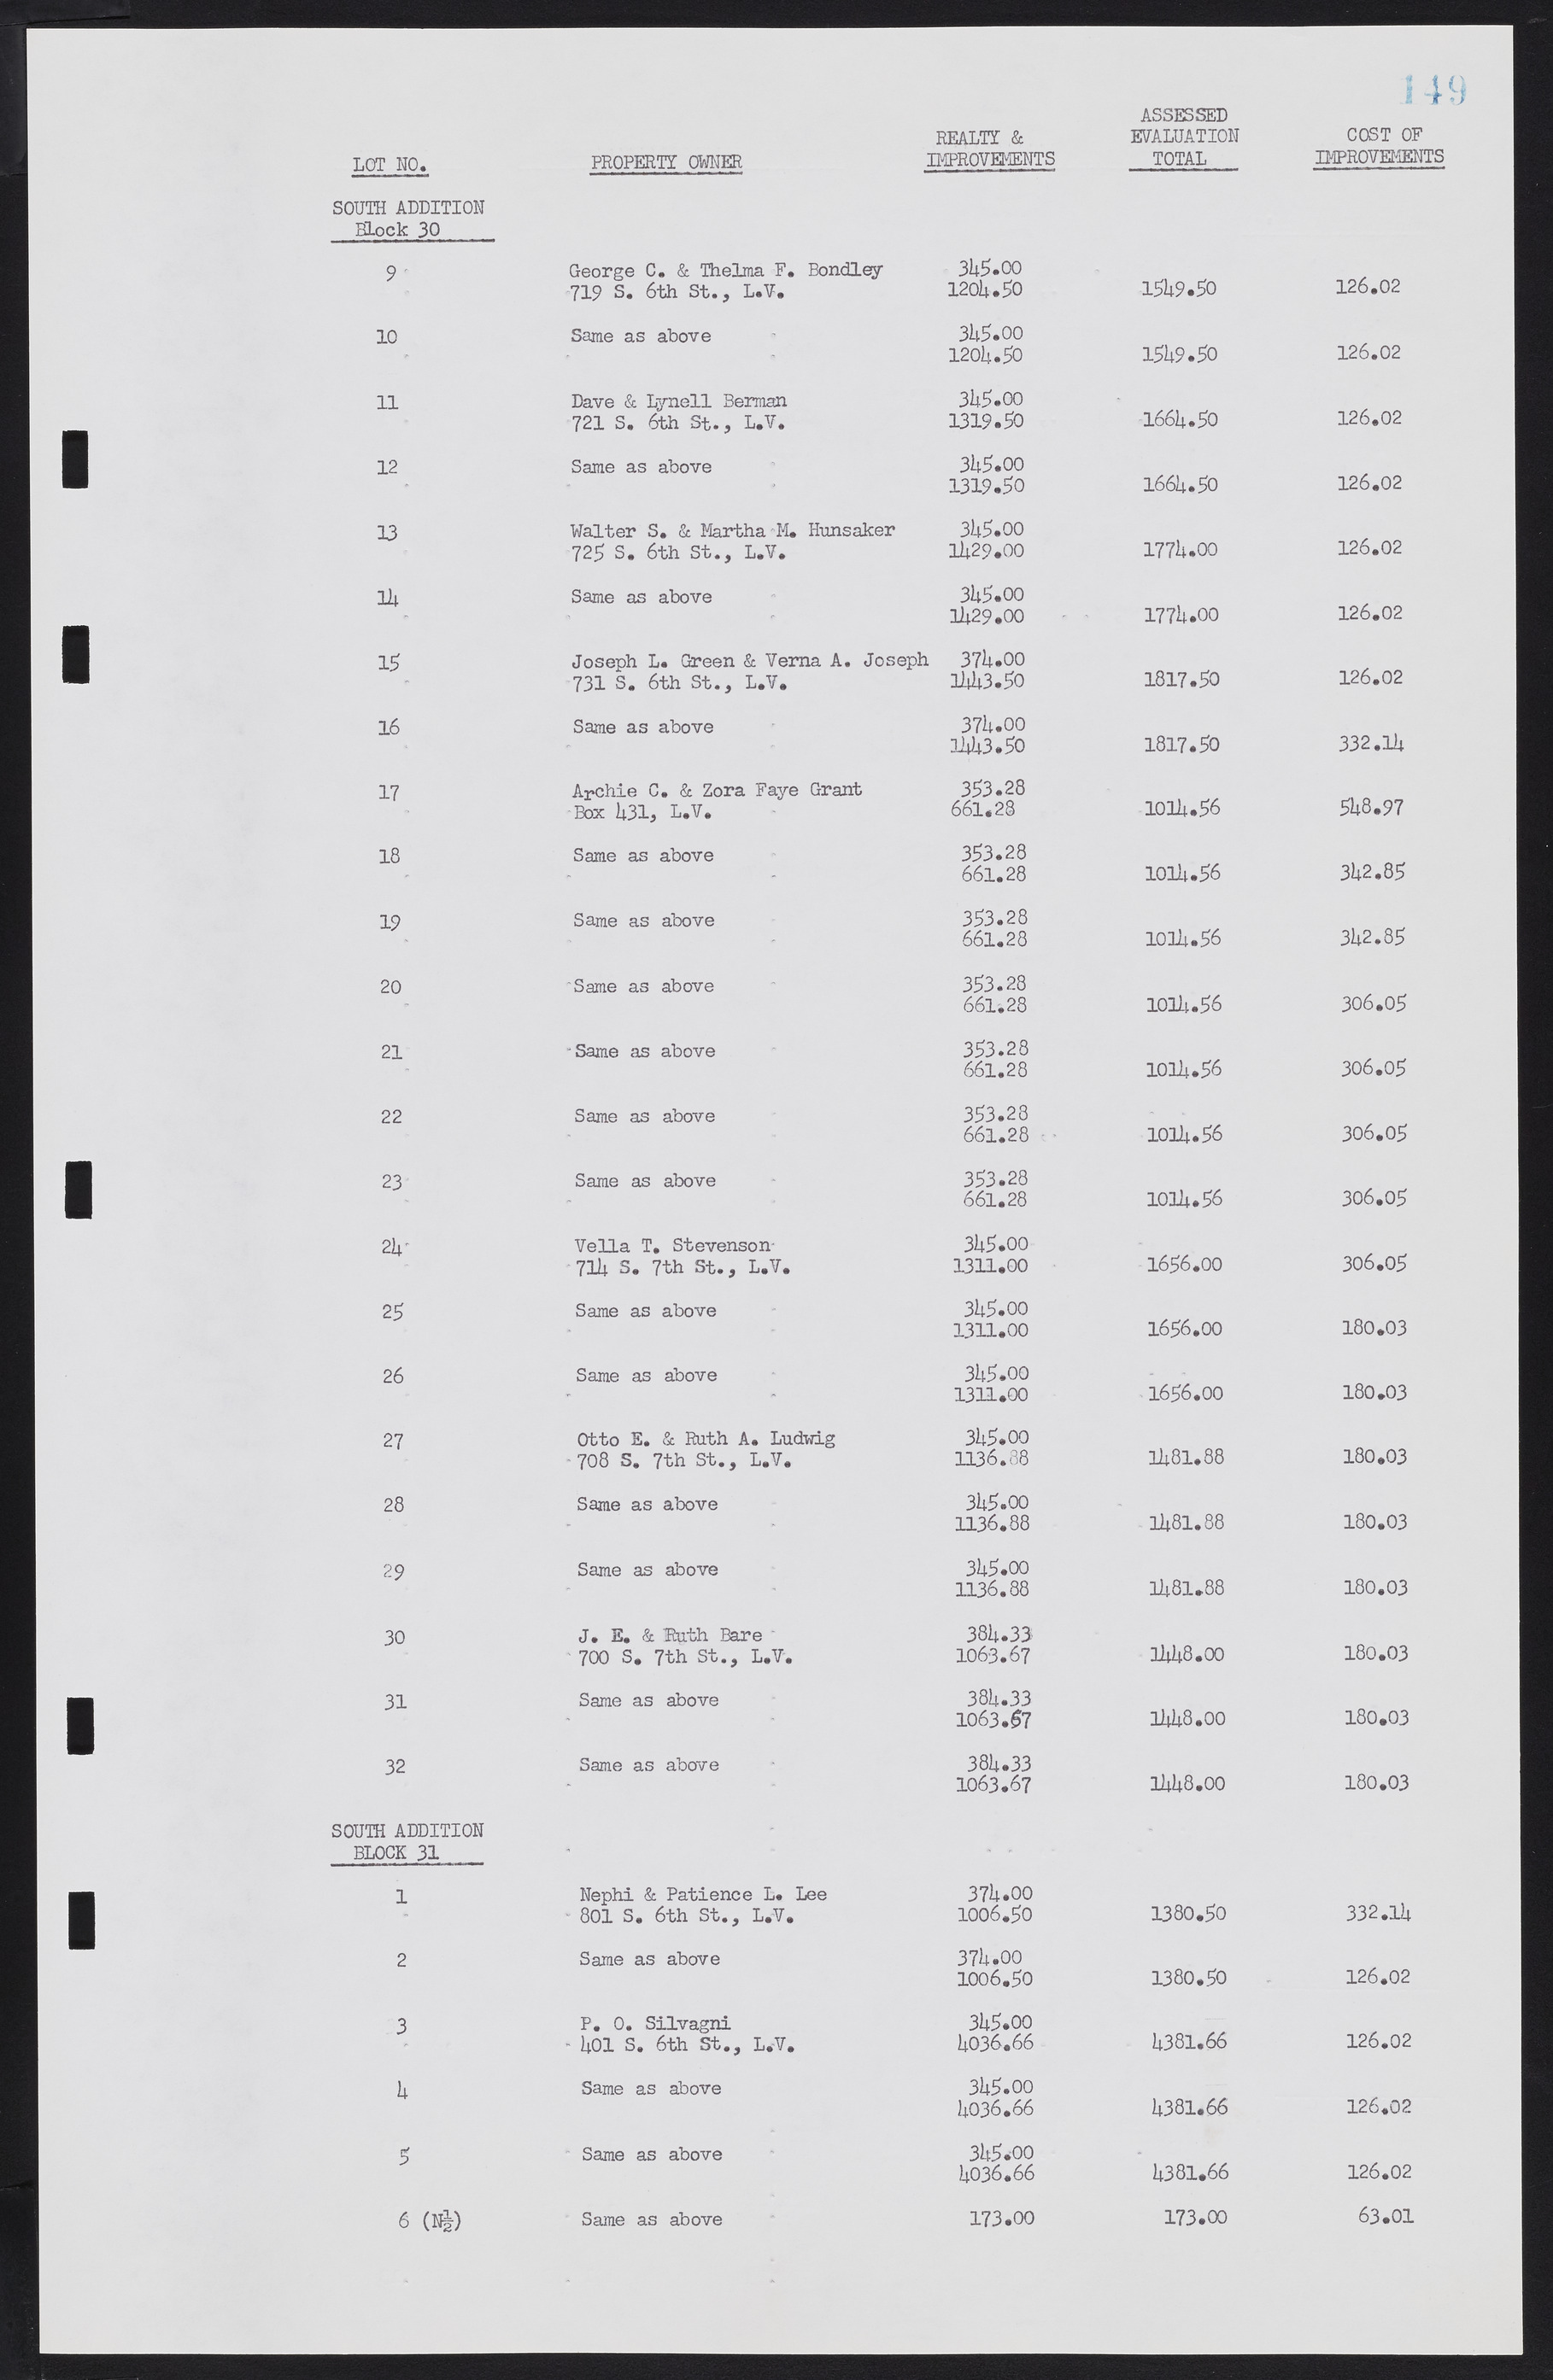 Las Vegas City Commission Minutes, February 17, 1954 to September 21, 1955, lvc000009-153